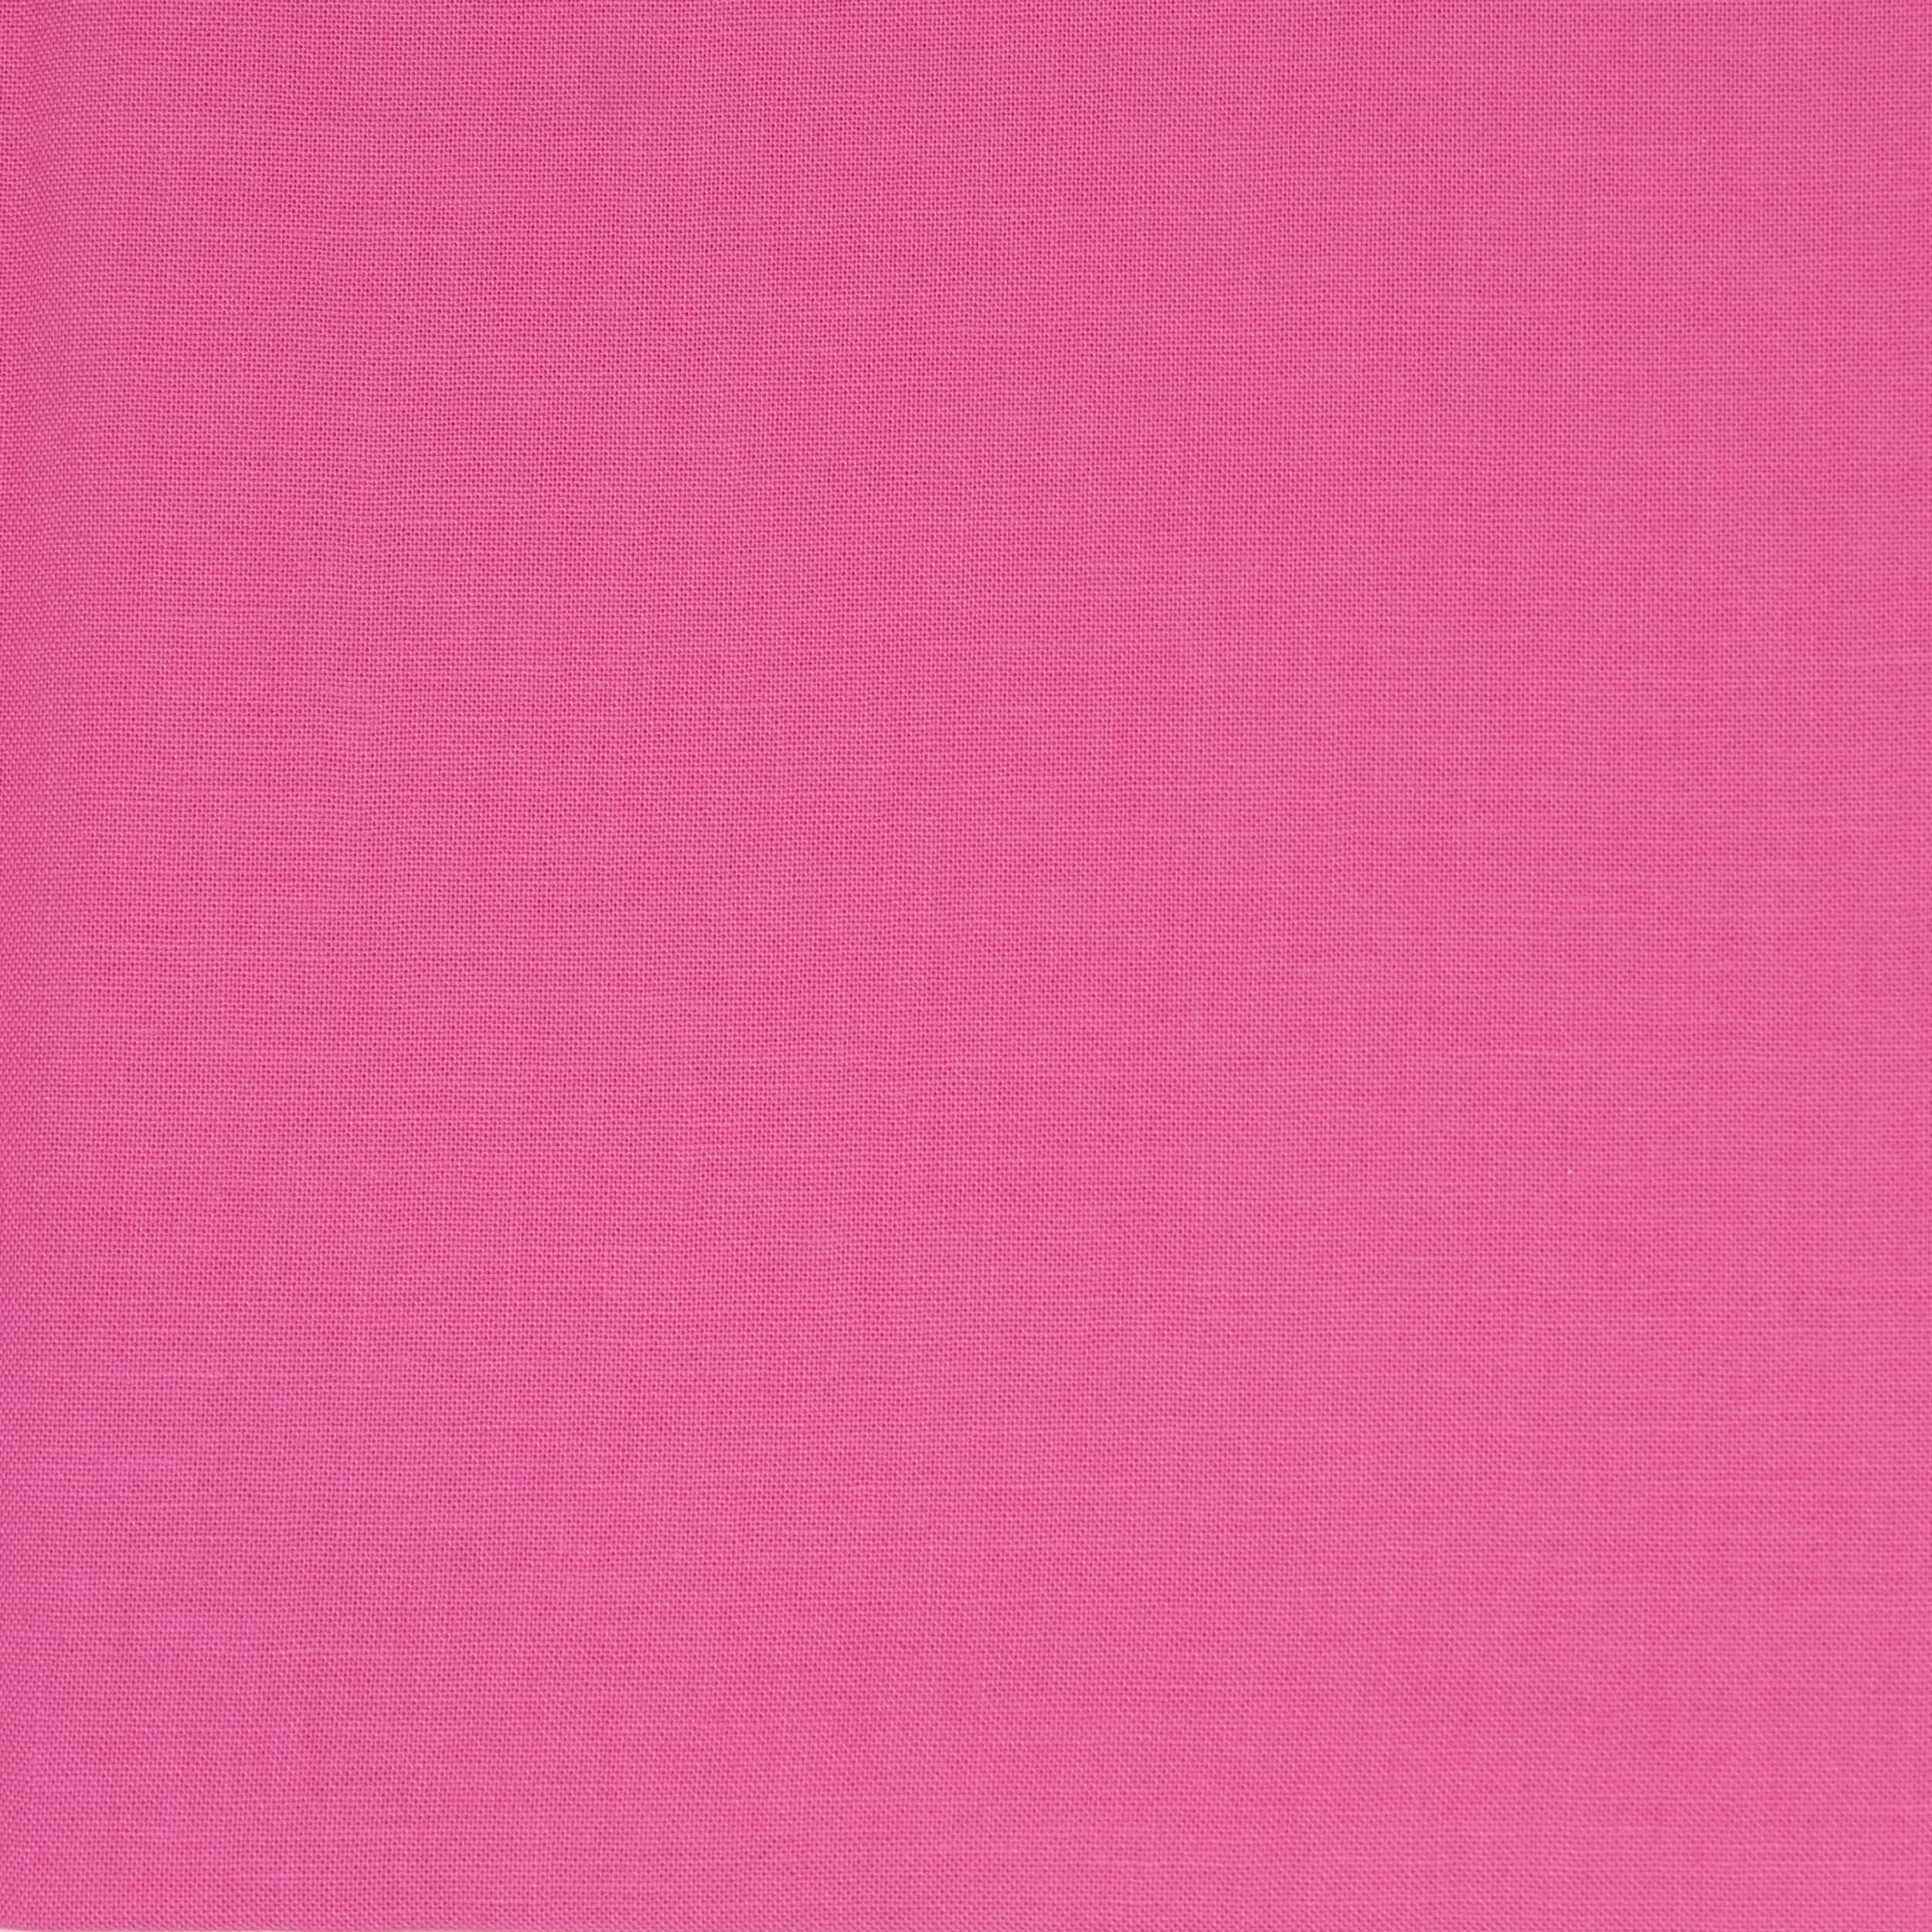 SINGER Barbie Pink Cotton Fabric